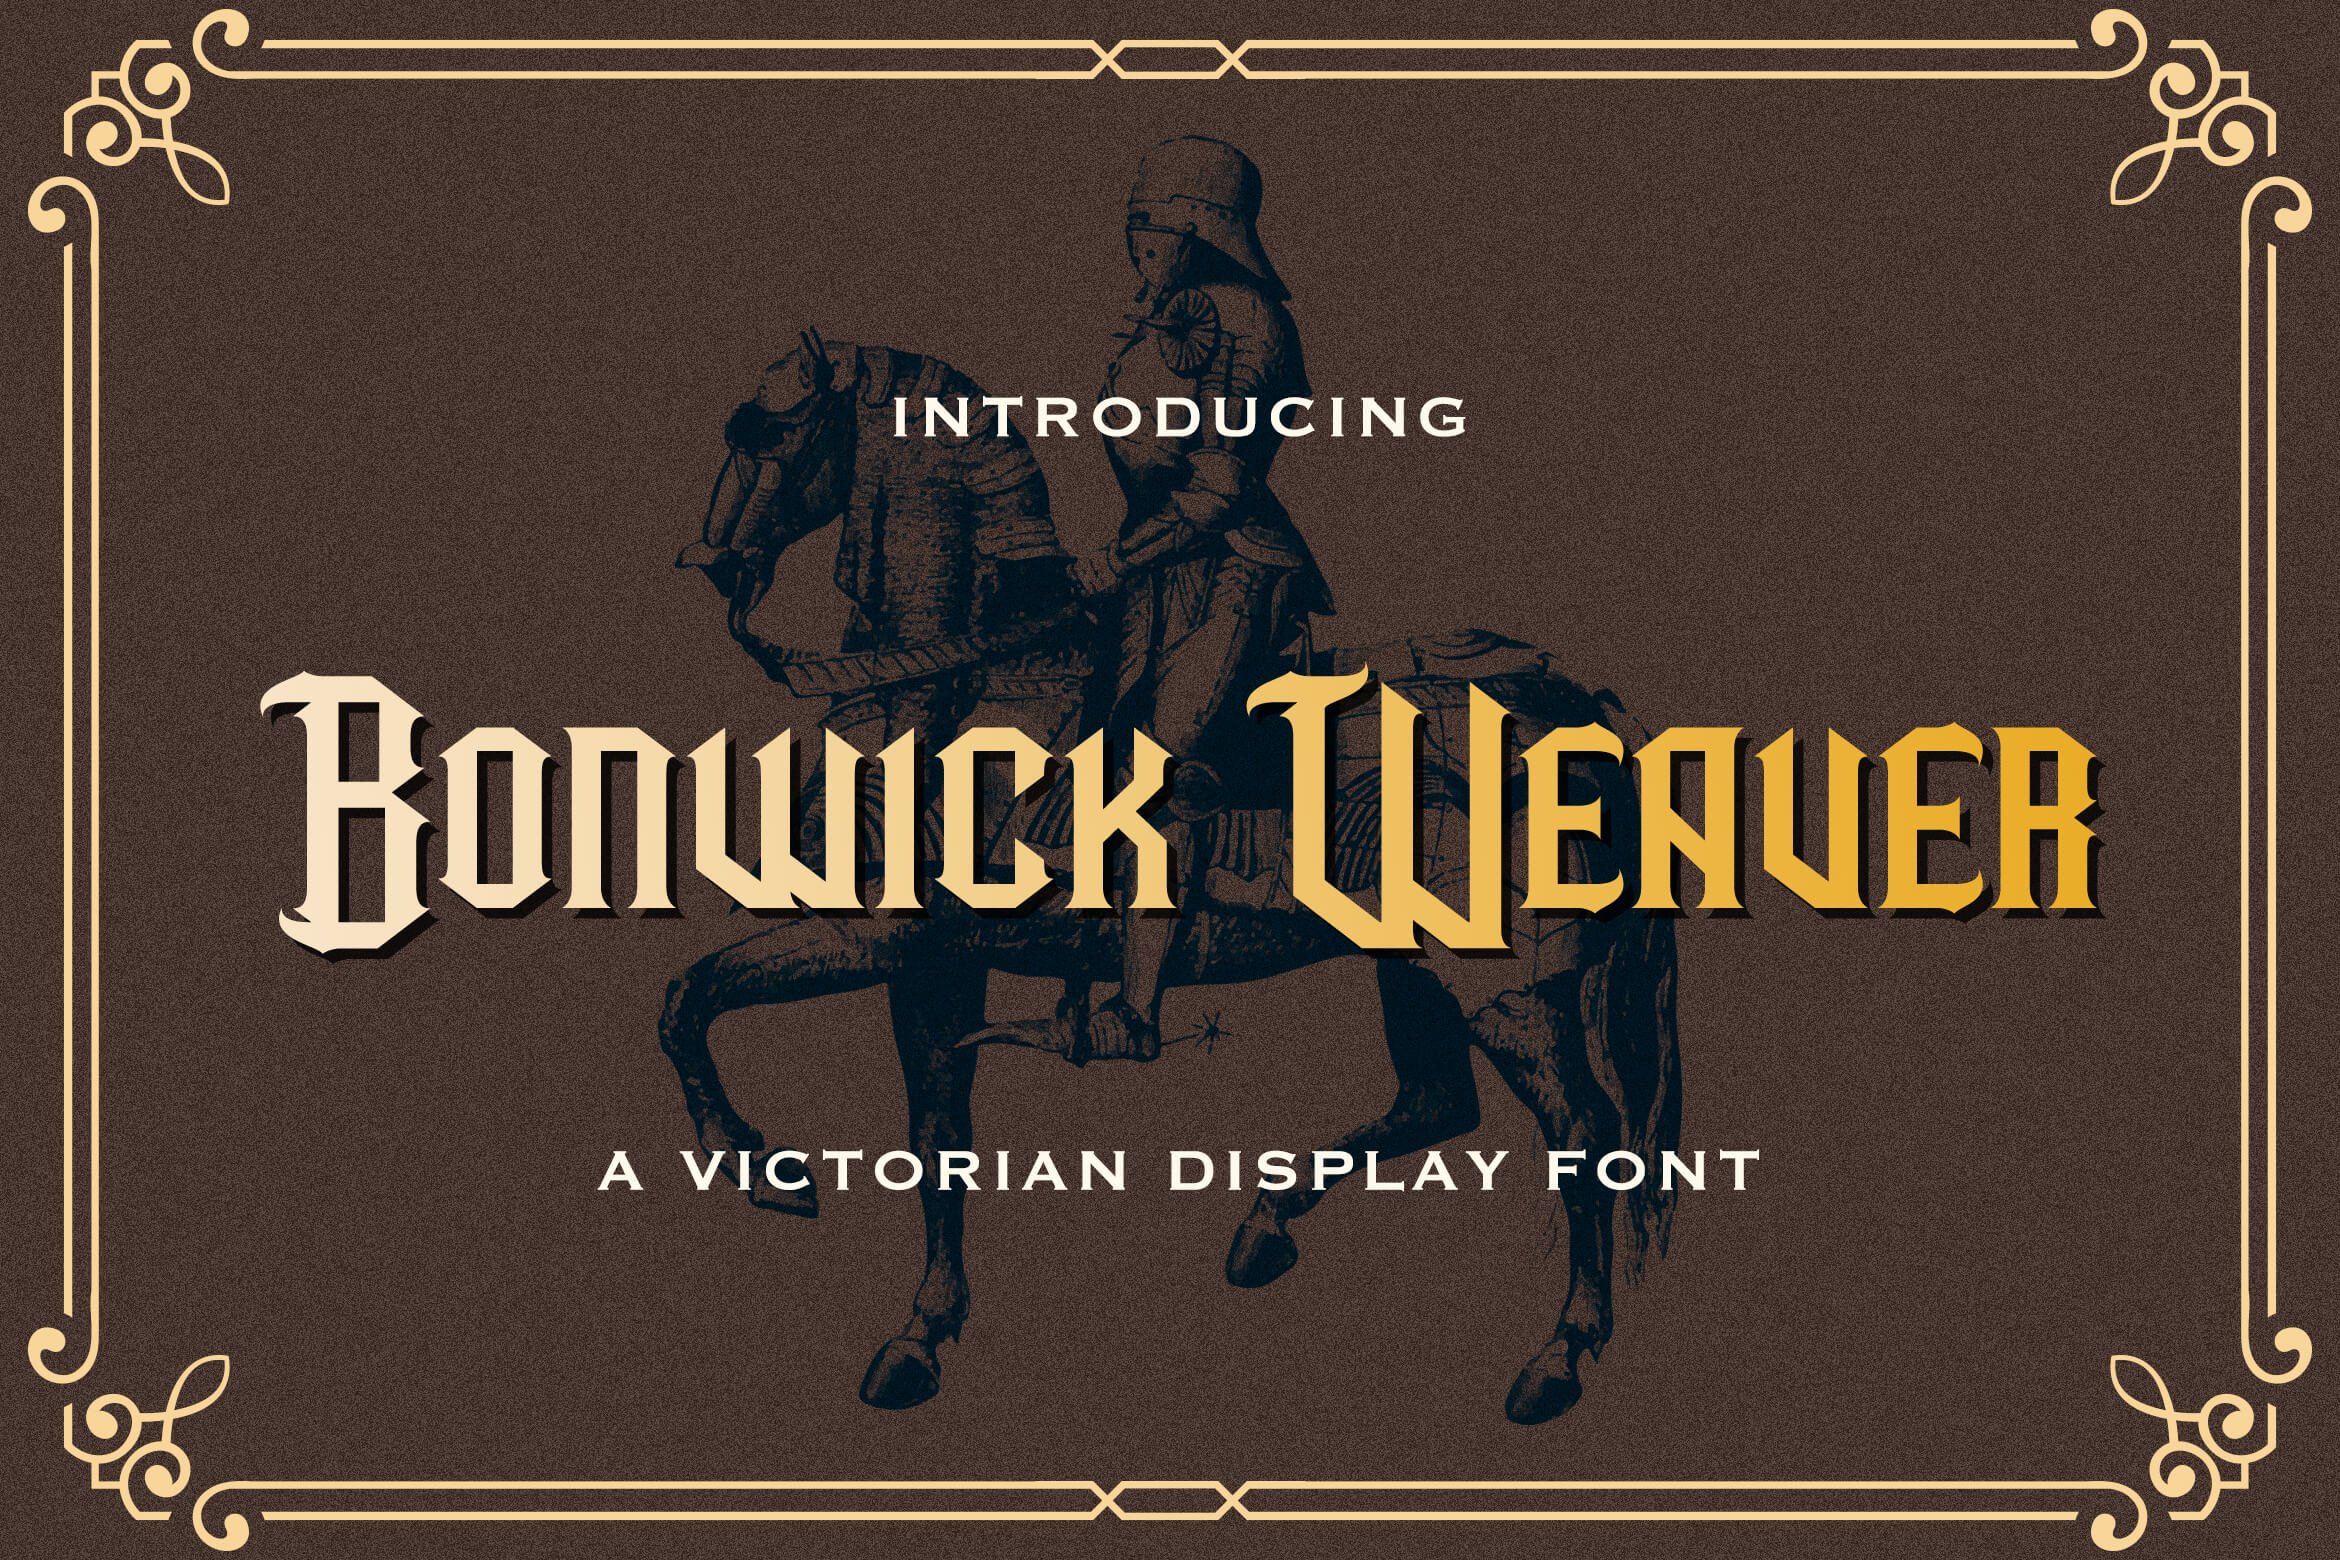 Bonwick Weaver - Victorian Font cover image.